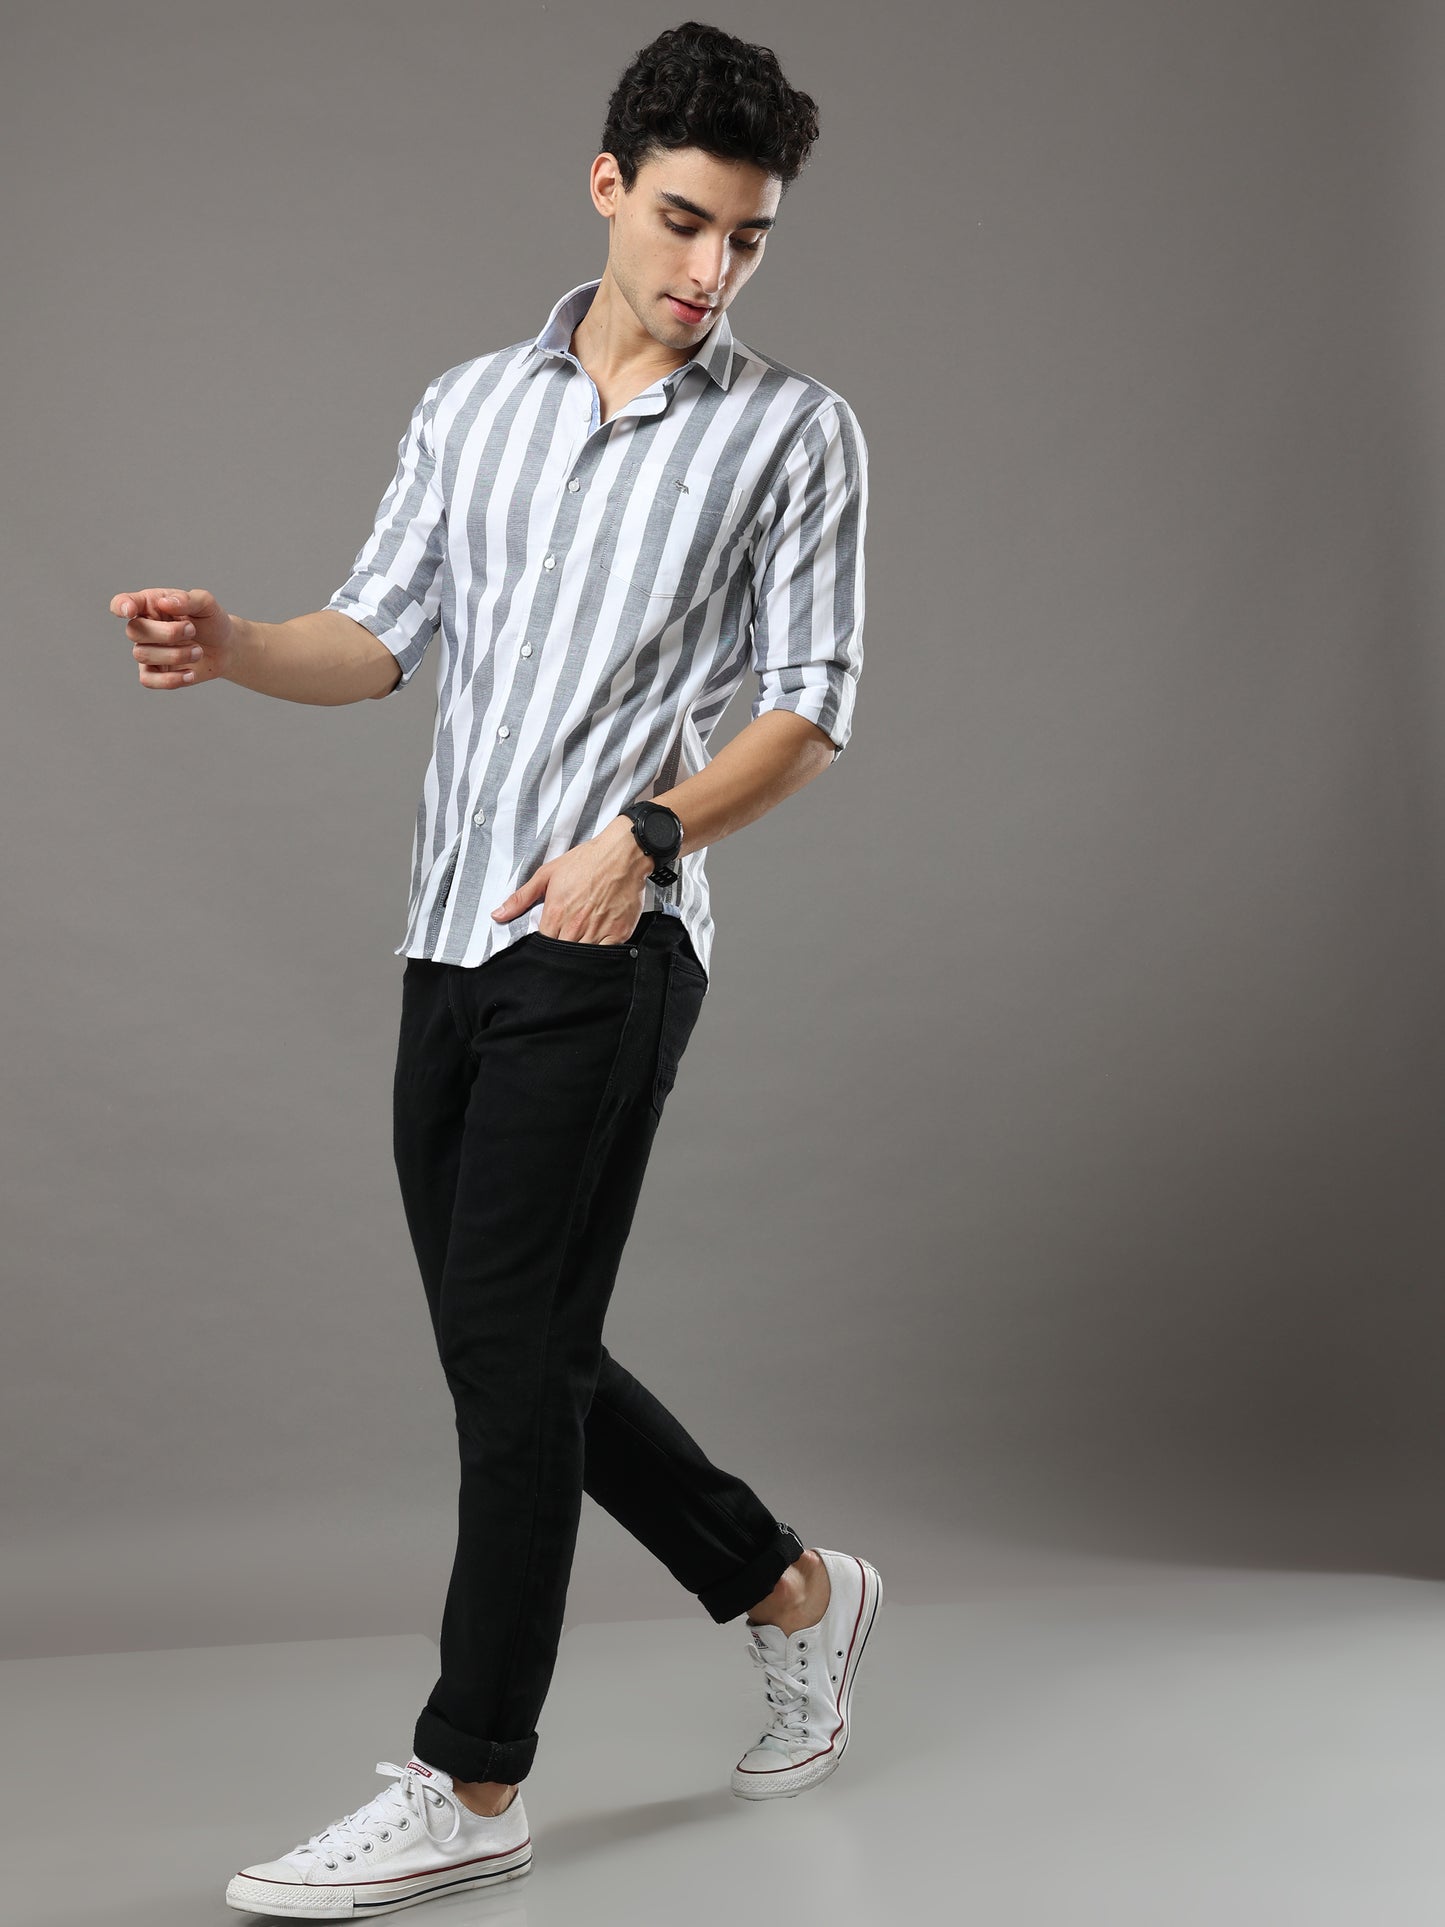 Black And White Stripes Shirt